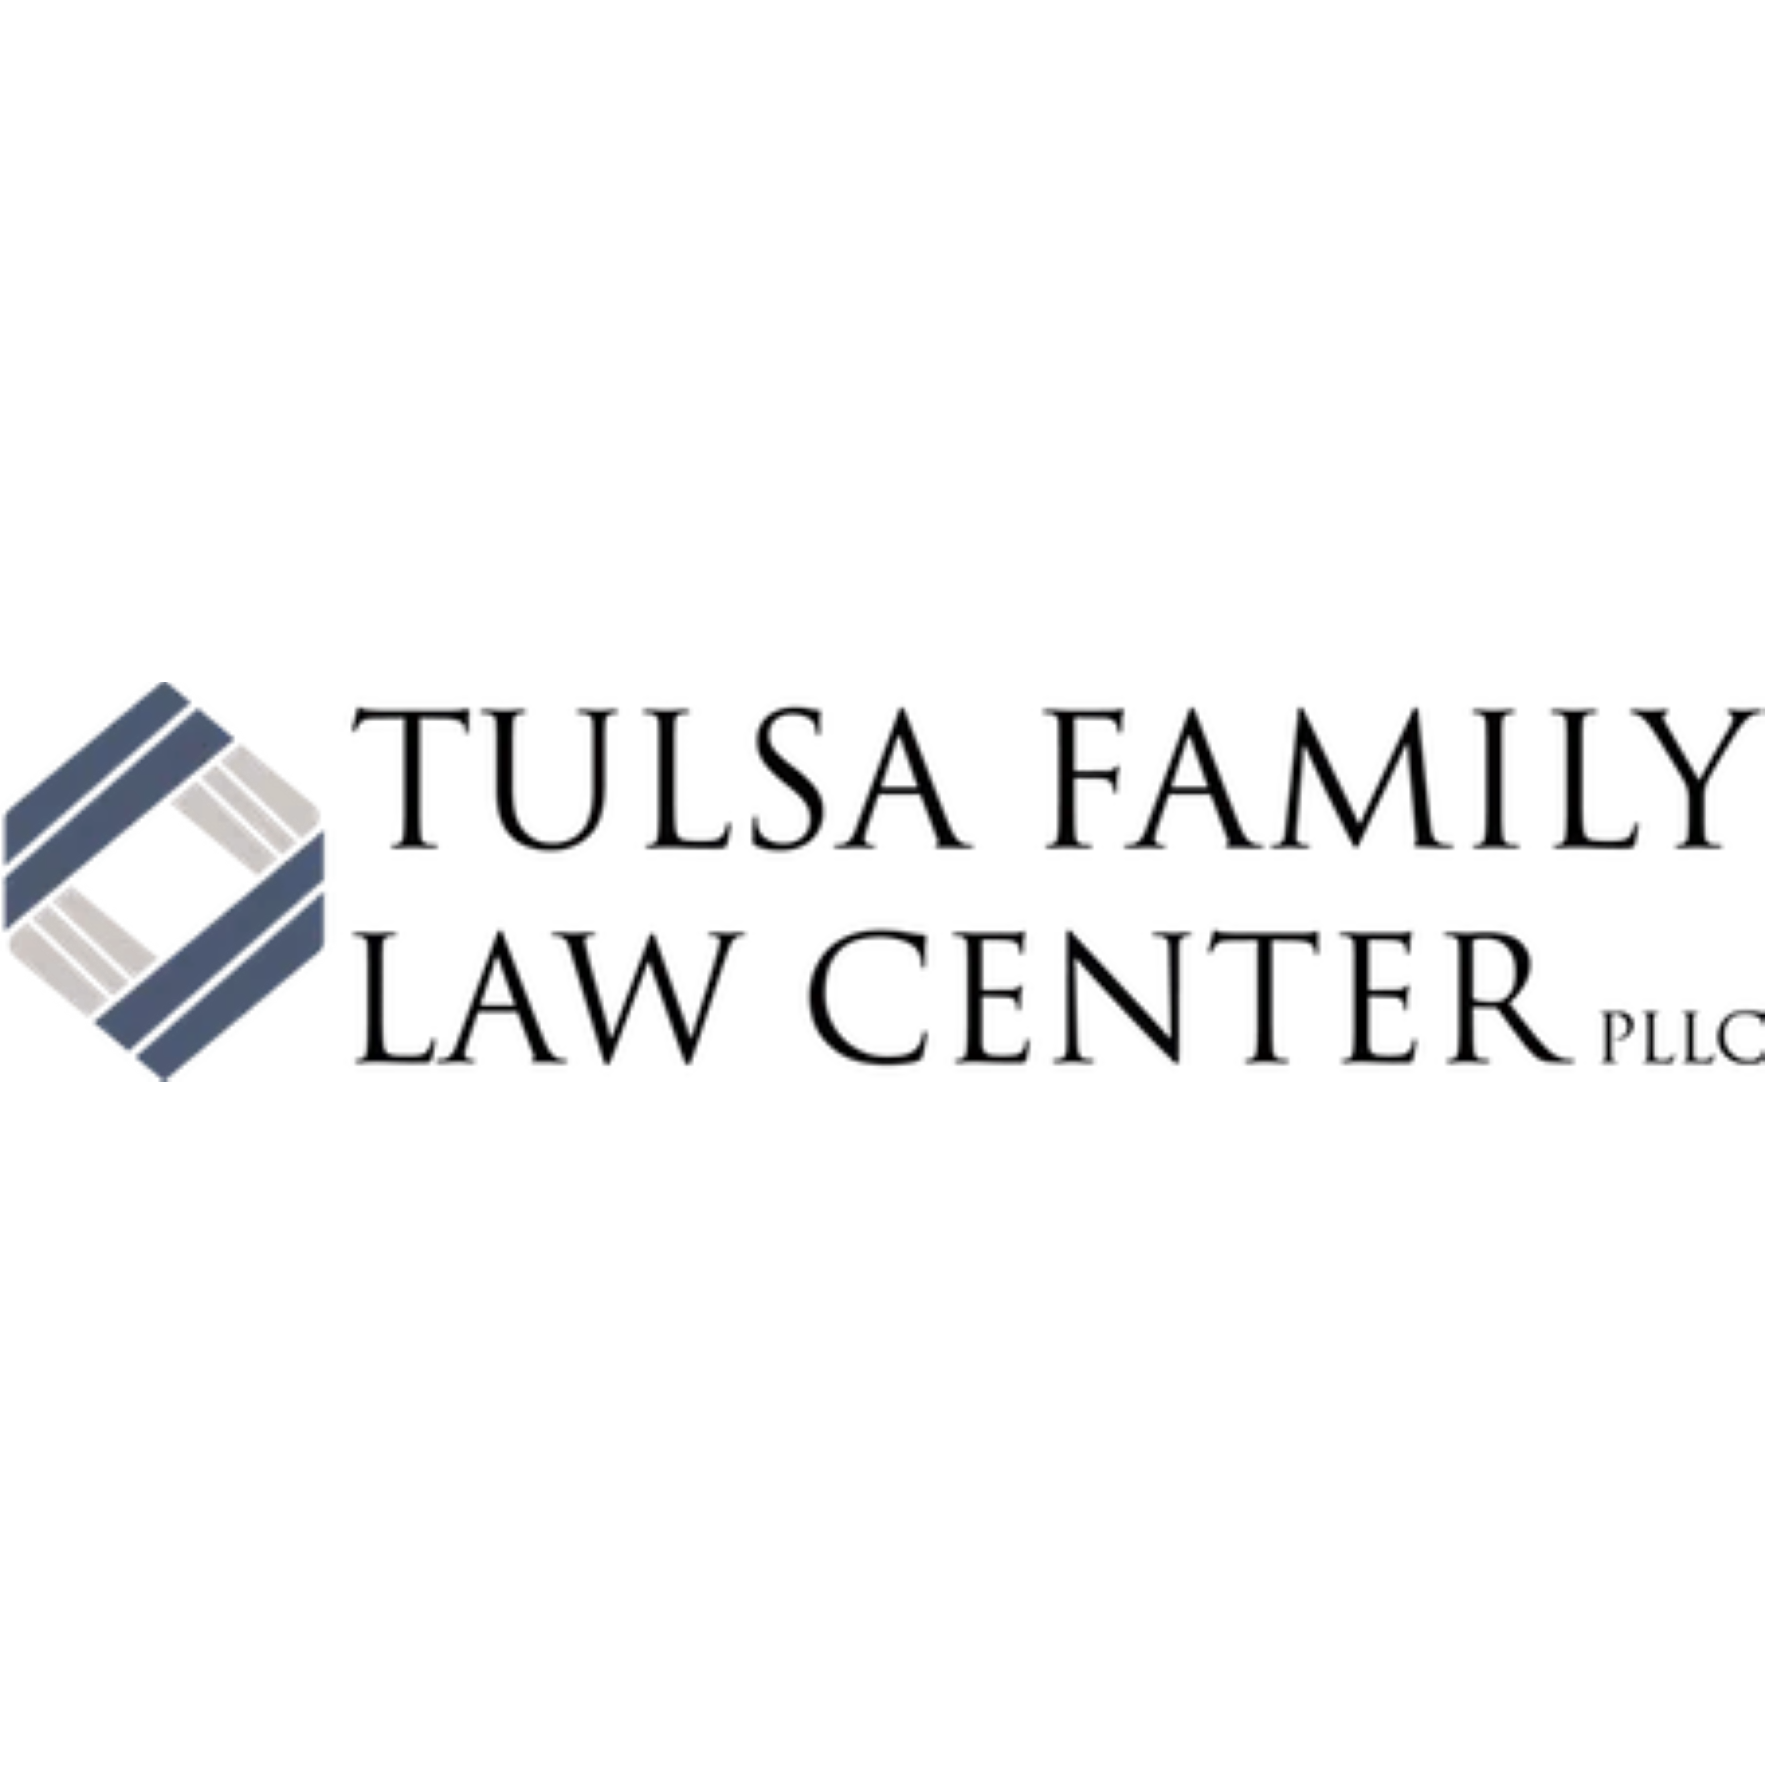 Tulsa Family Law Center, PLLC